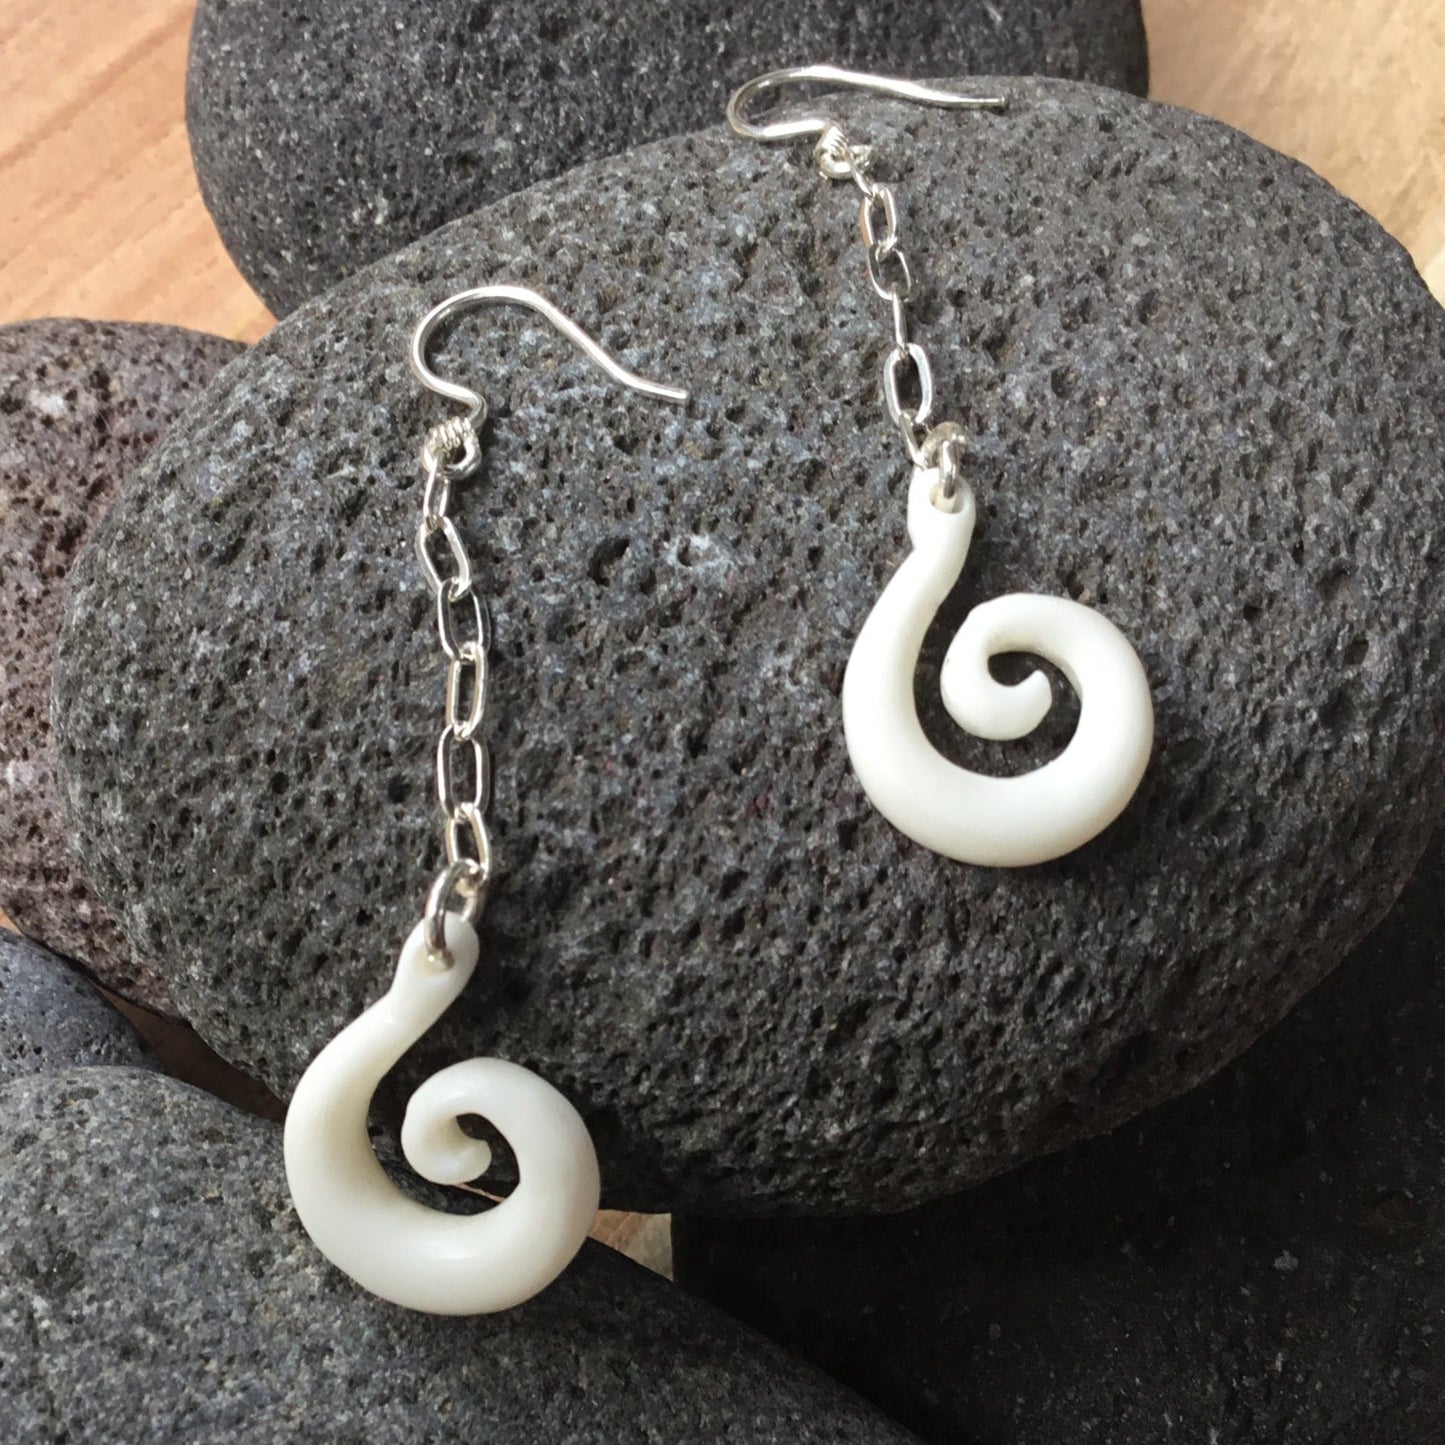 Spiral Hook Earrings